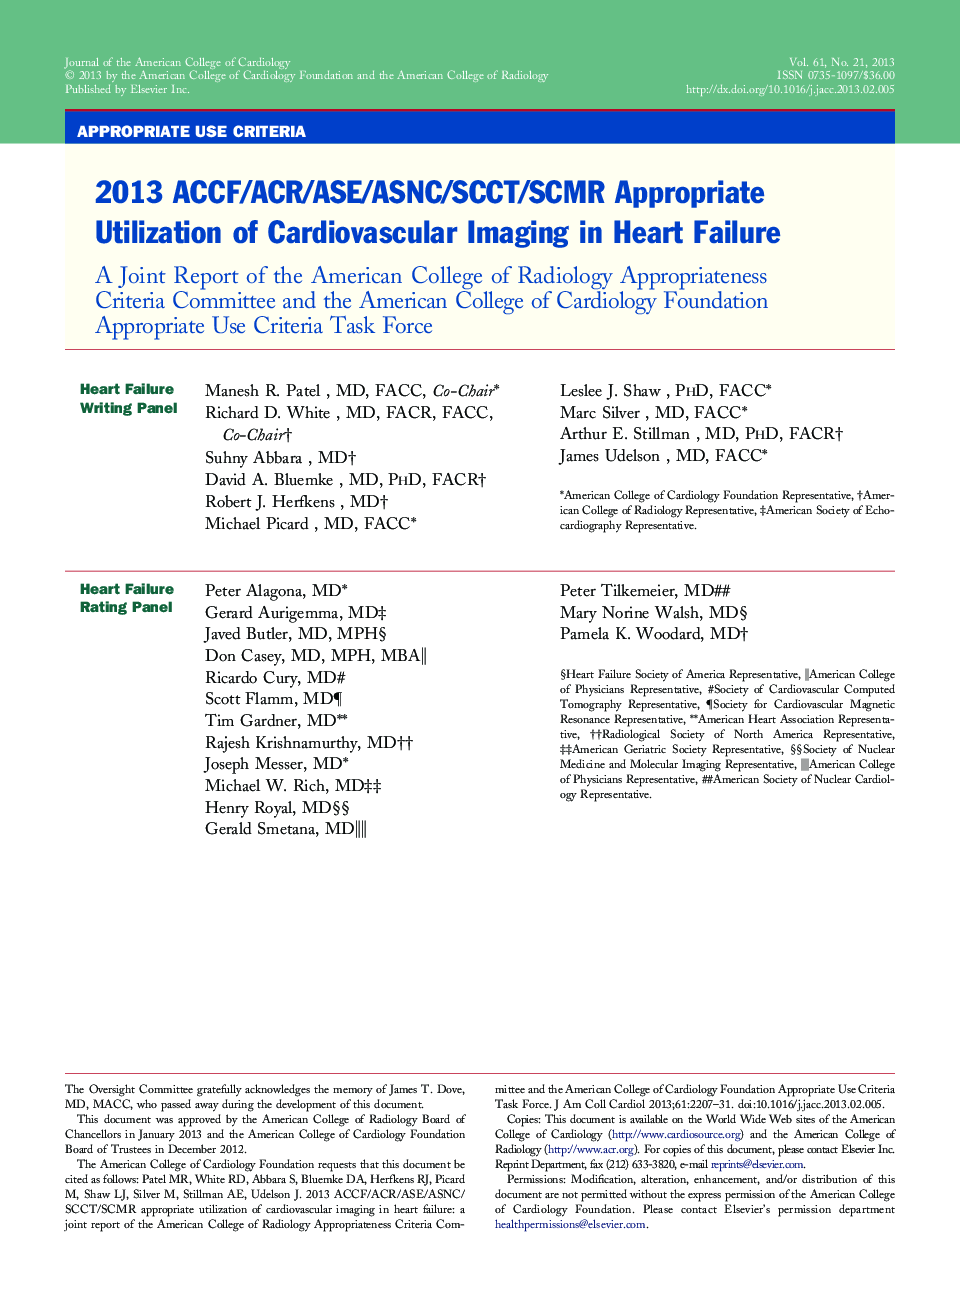 2013 ACCF/ACR/ASE/ASNC/SCCT/SCMR Appropriate Utilization of Cardiovascular Imaging in Heart Failure